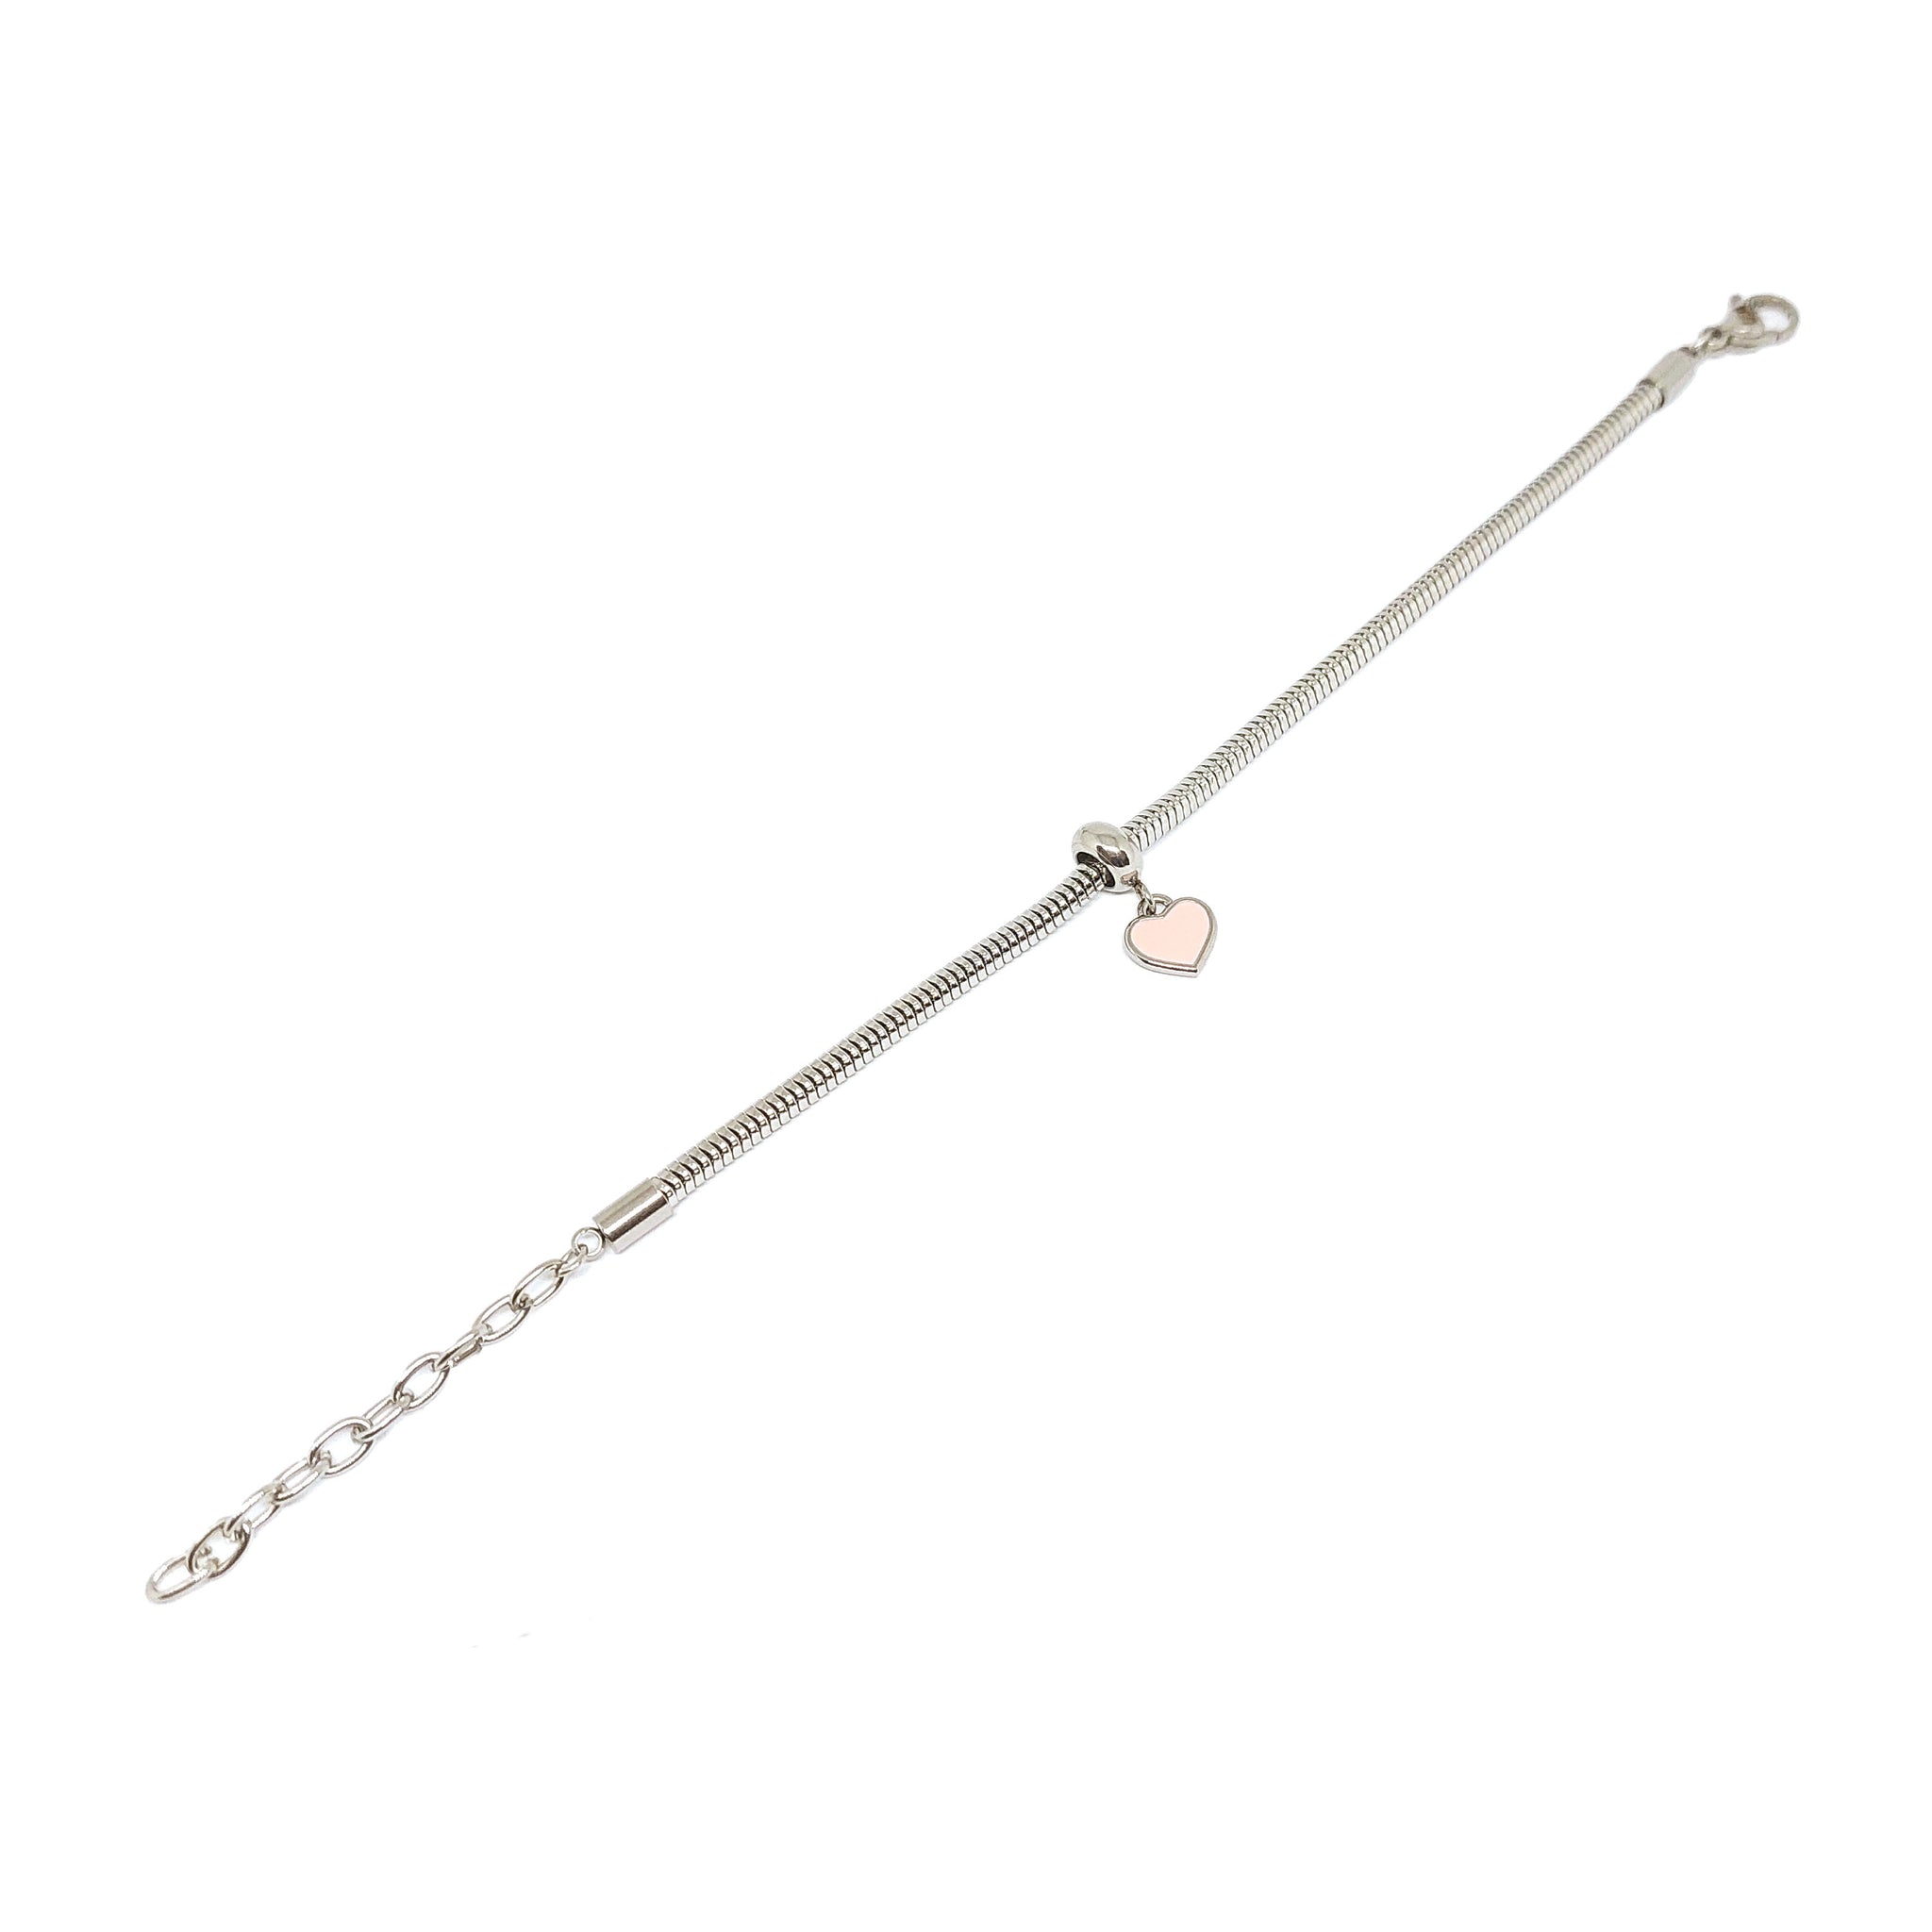 ESBL 7937: Adjustable Steel Bracelet w/ Pink Heart Charm